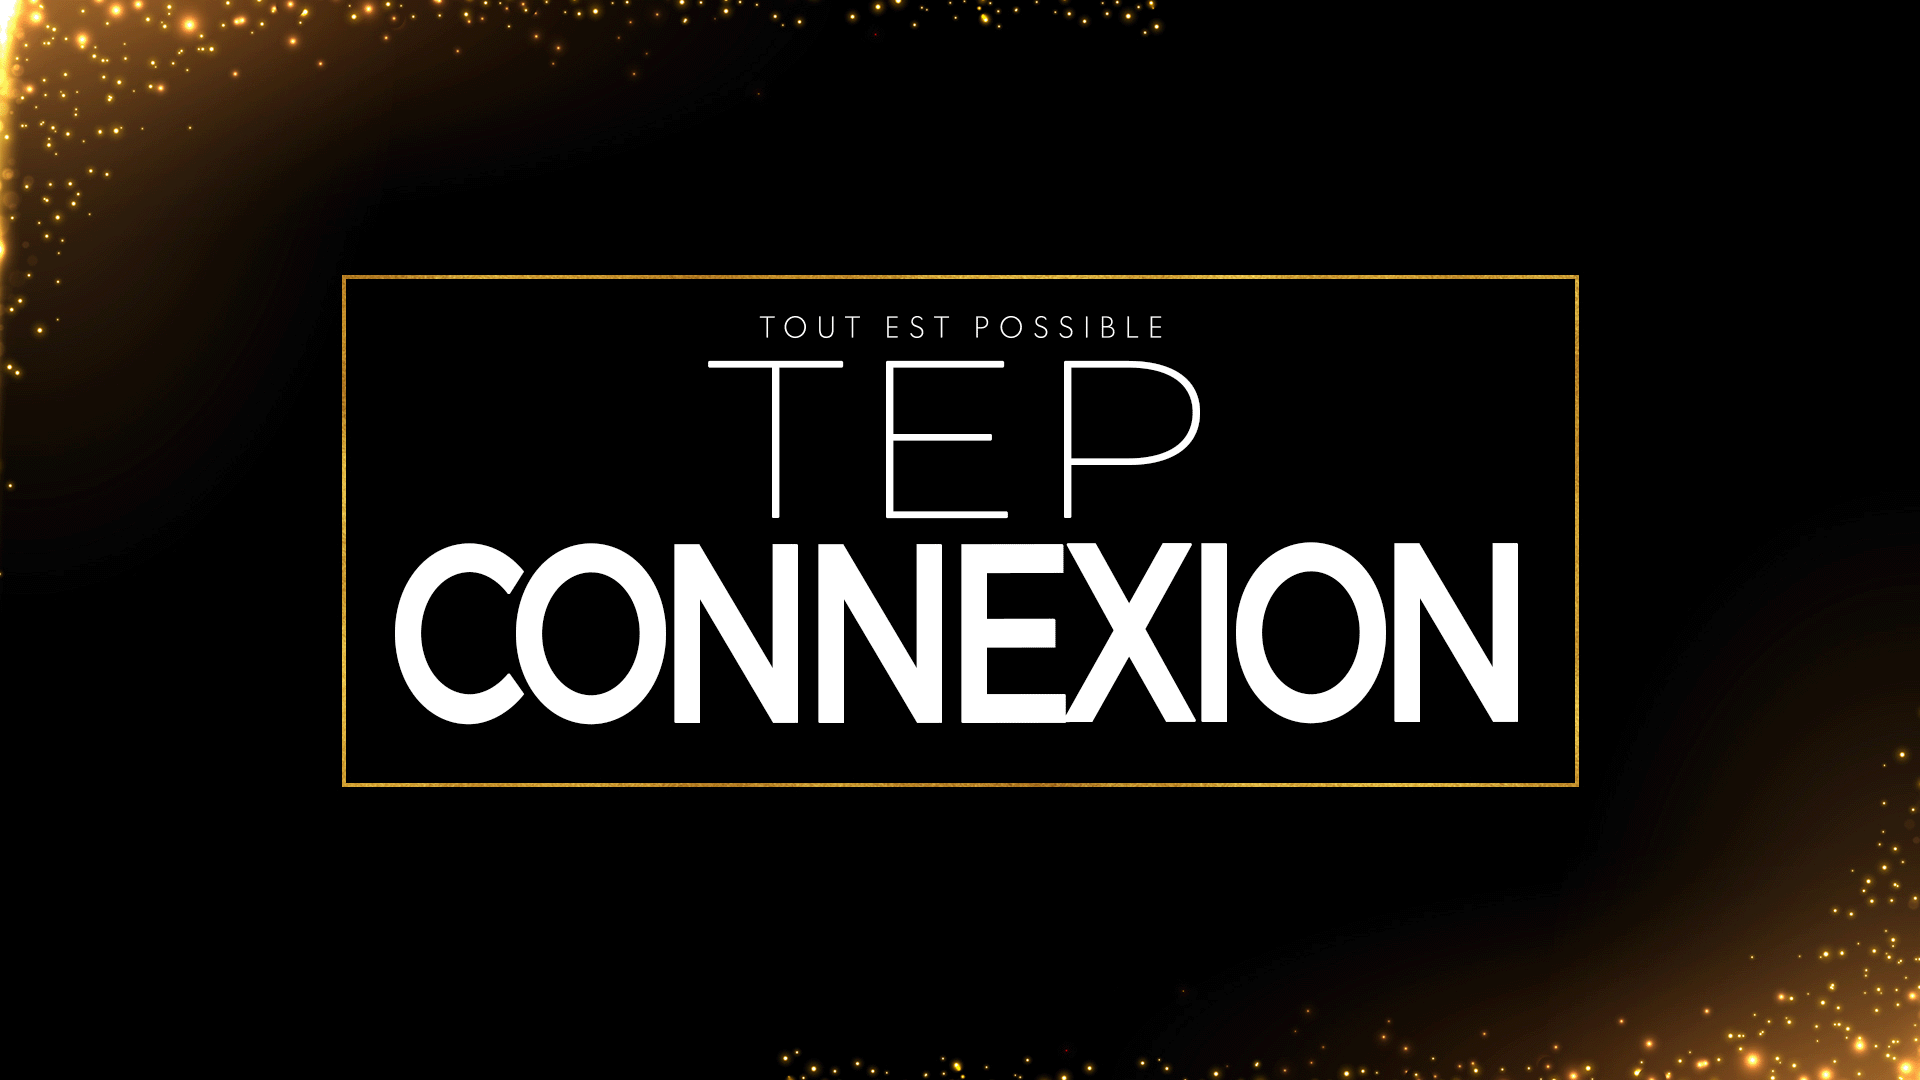 TEP connexion